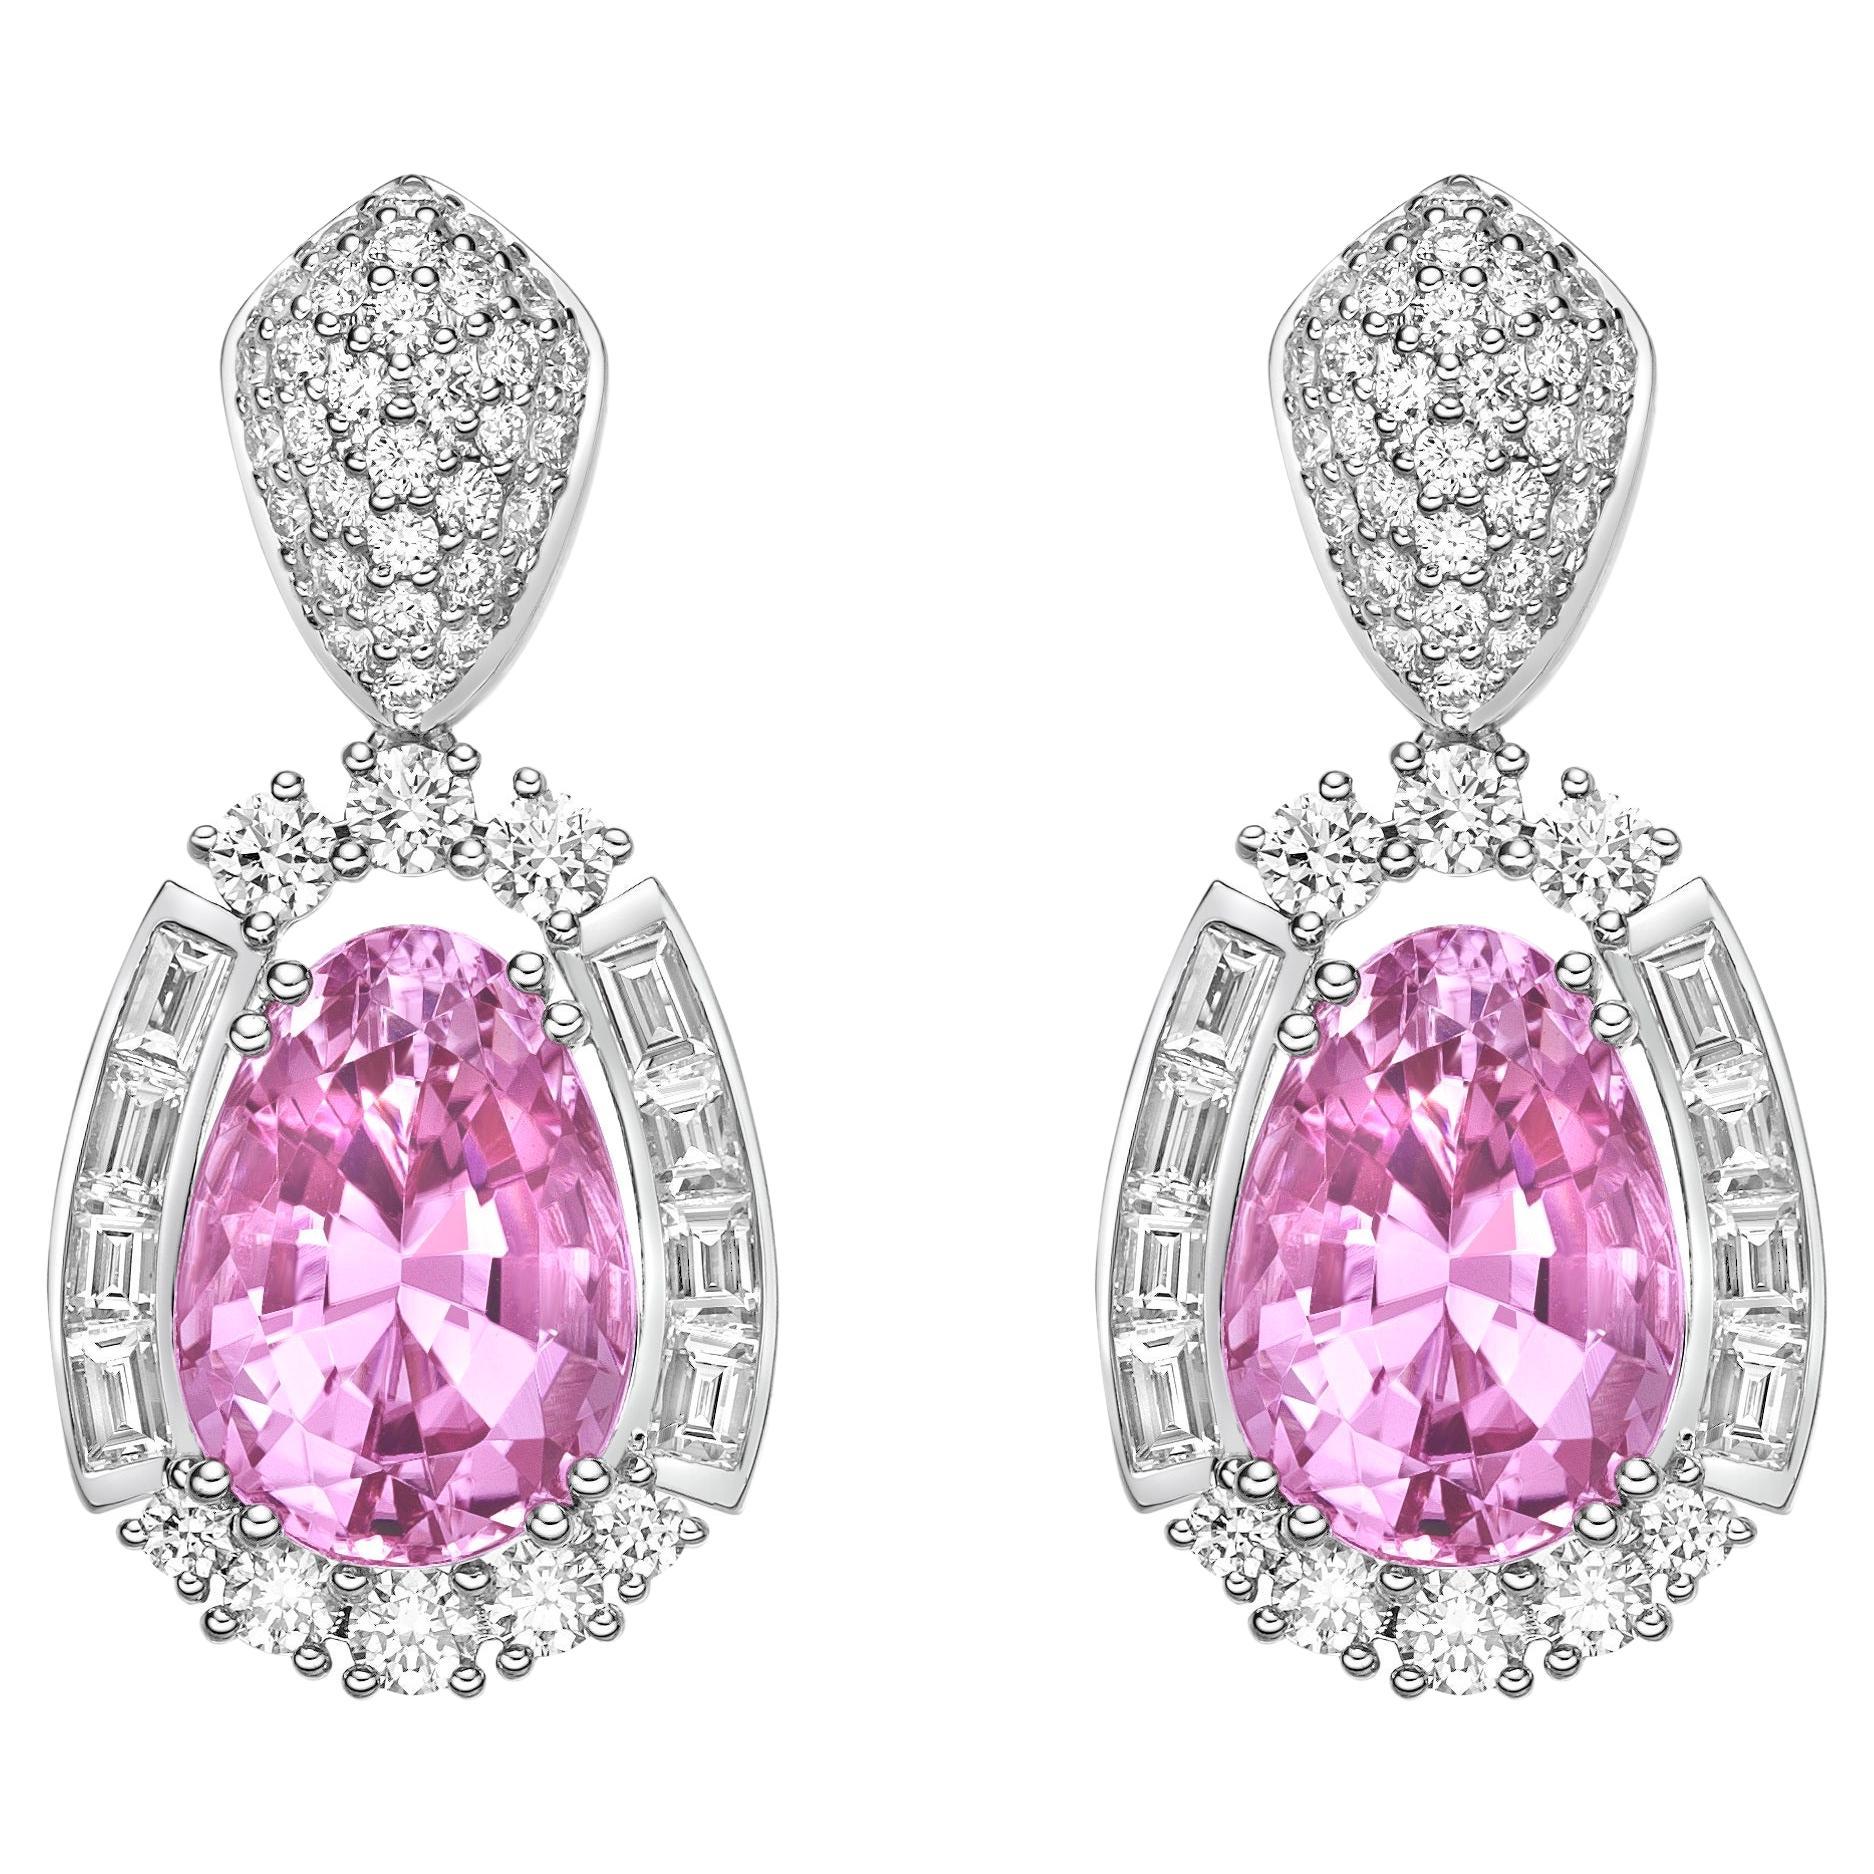 11.19 Carat Pink Tourmaline Drop Earrings in 18Karat White Gold with Diamond.